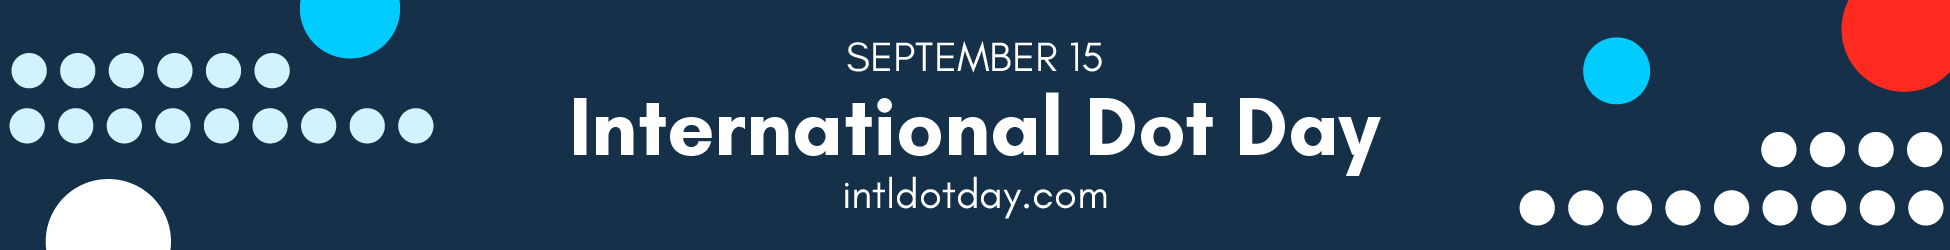 International Dot Day Website Banner